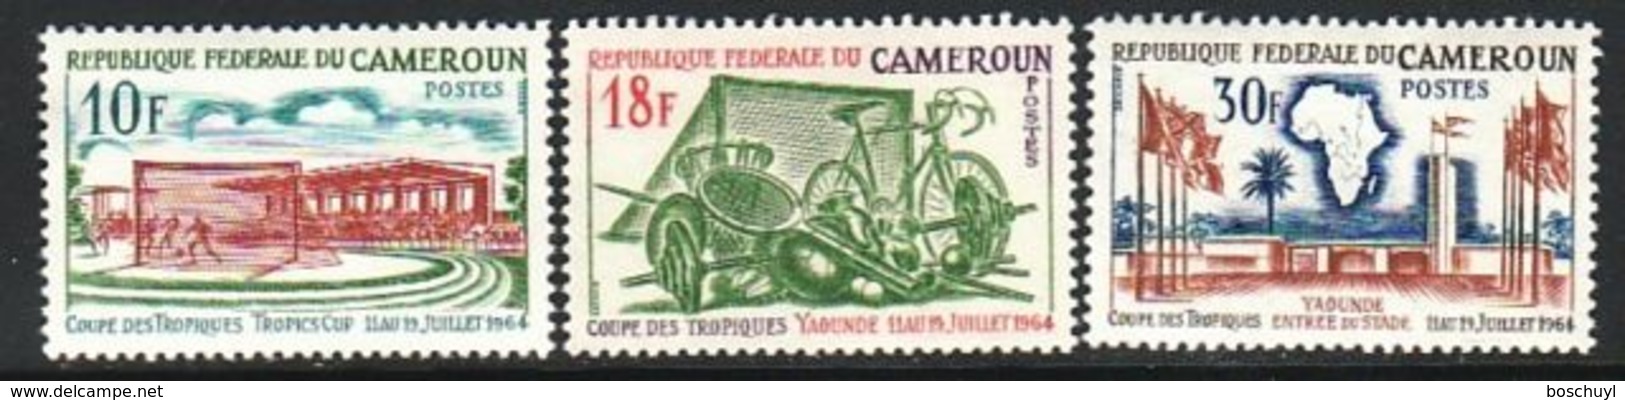 Cameroun, 1964, Sports, Tropics Cup, Soccer, Football, MNH, Michel 405-407 - Cameroun (1960-...)